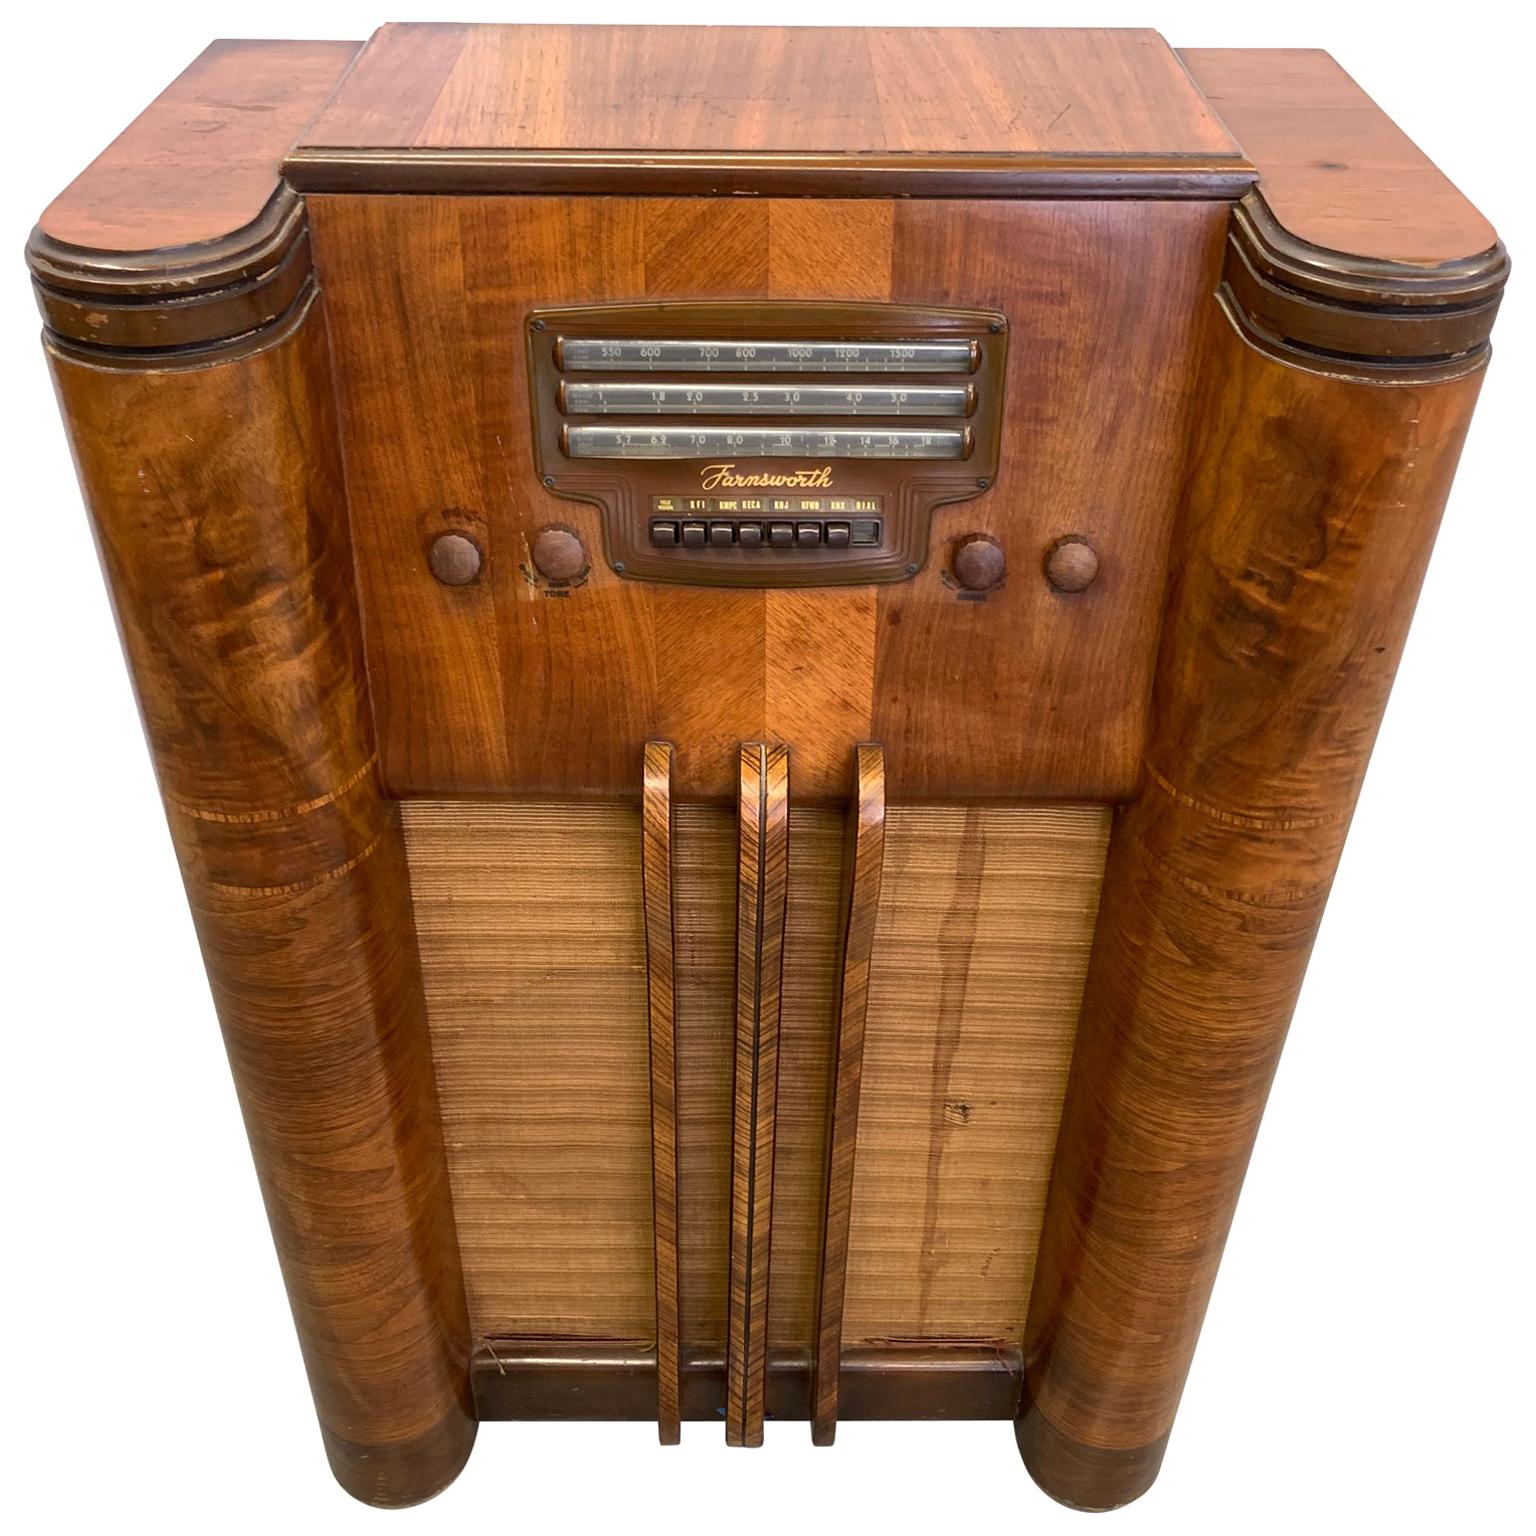 Vintage Bodenradio von Farnsworth Television and Radio Corp